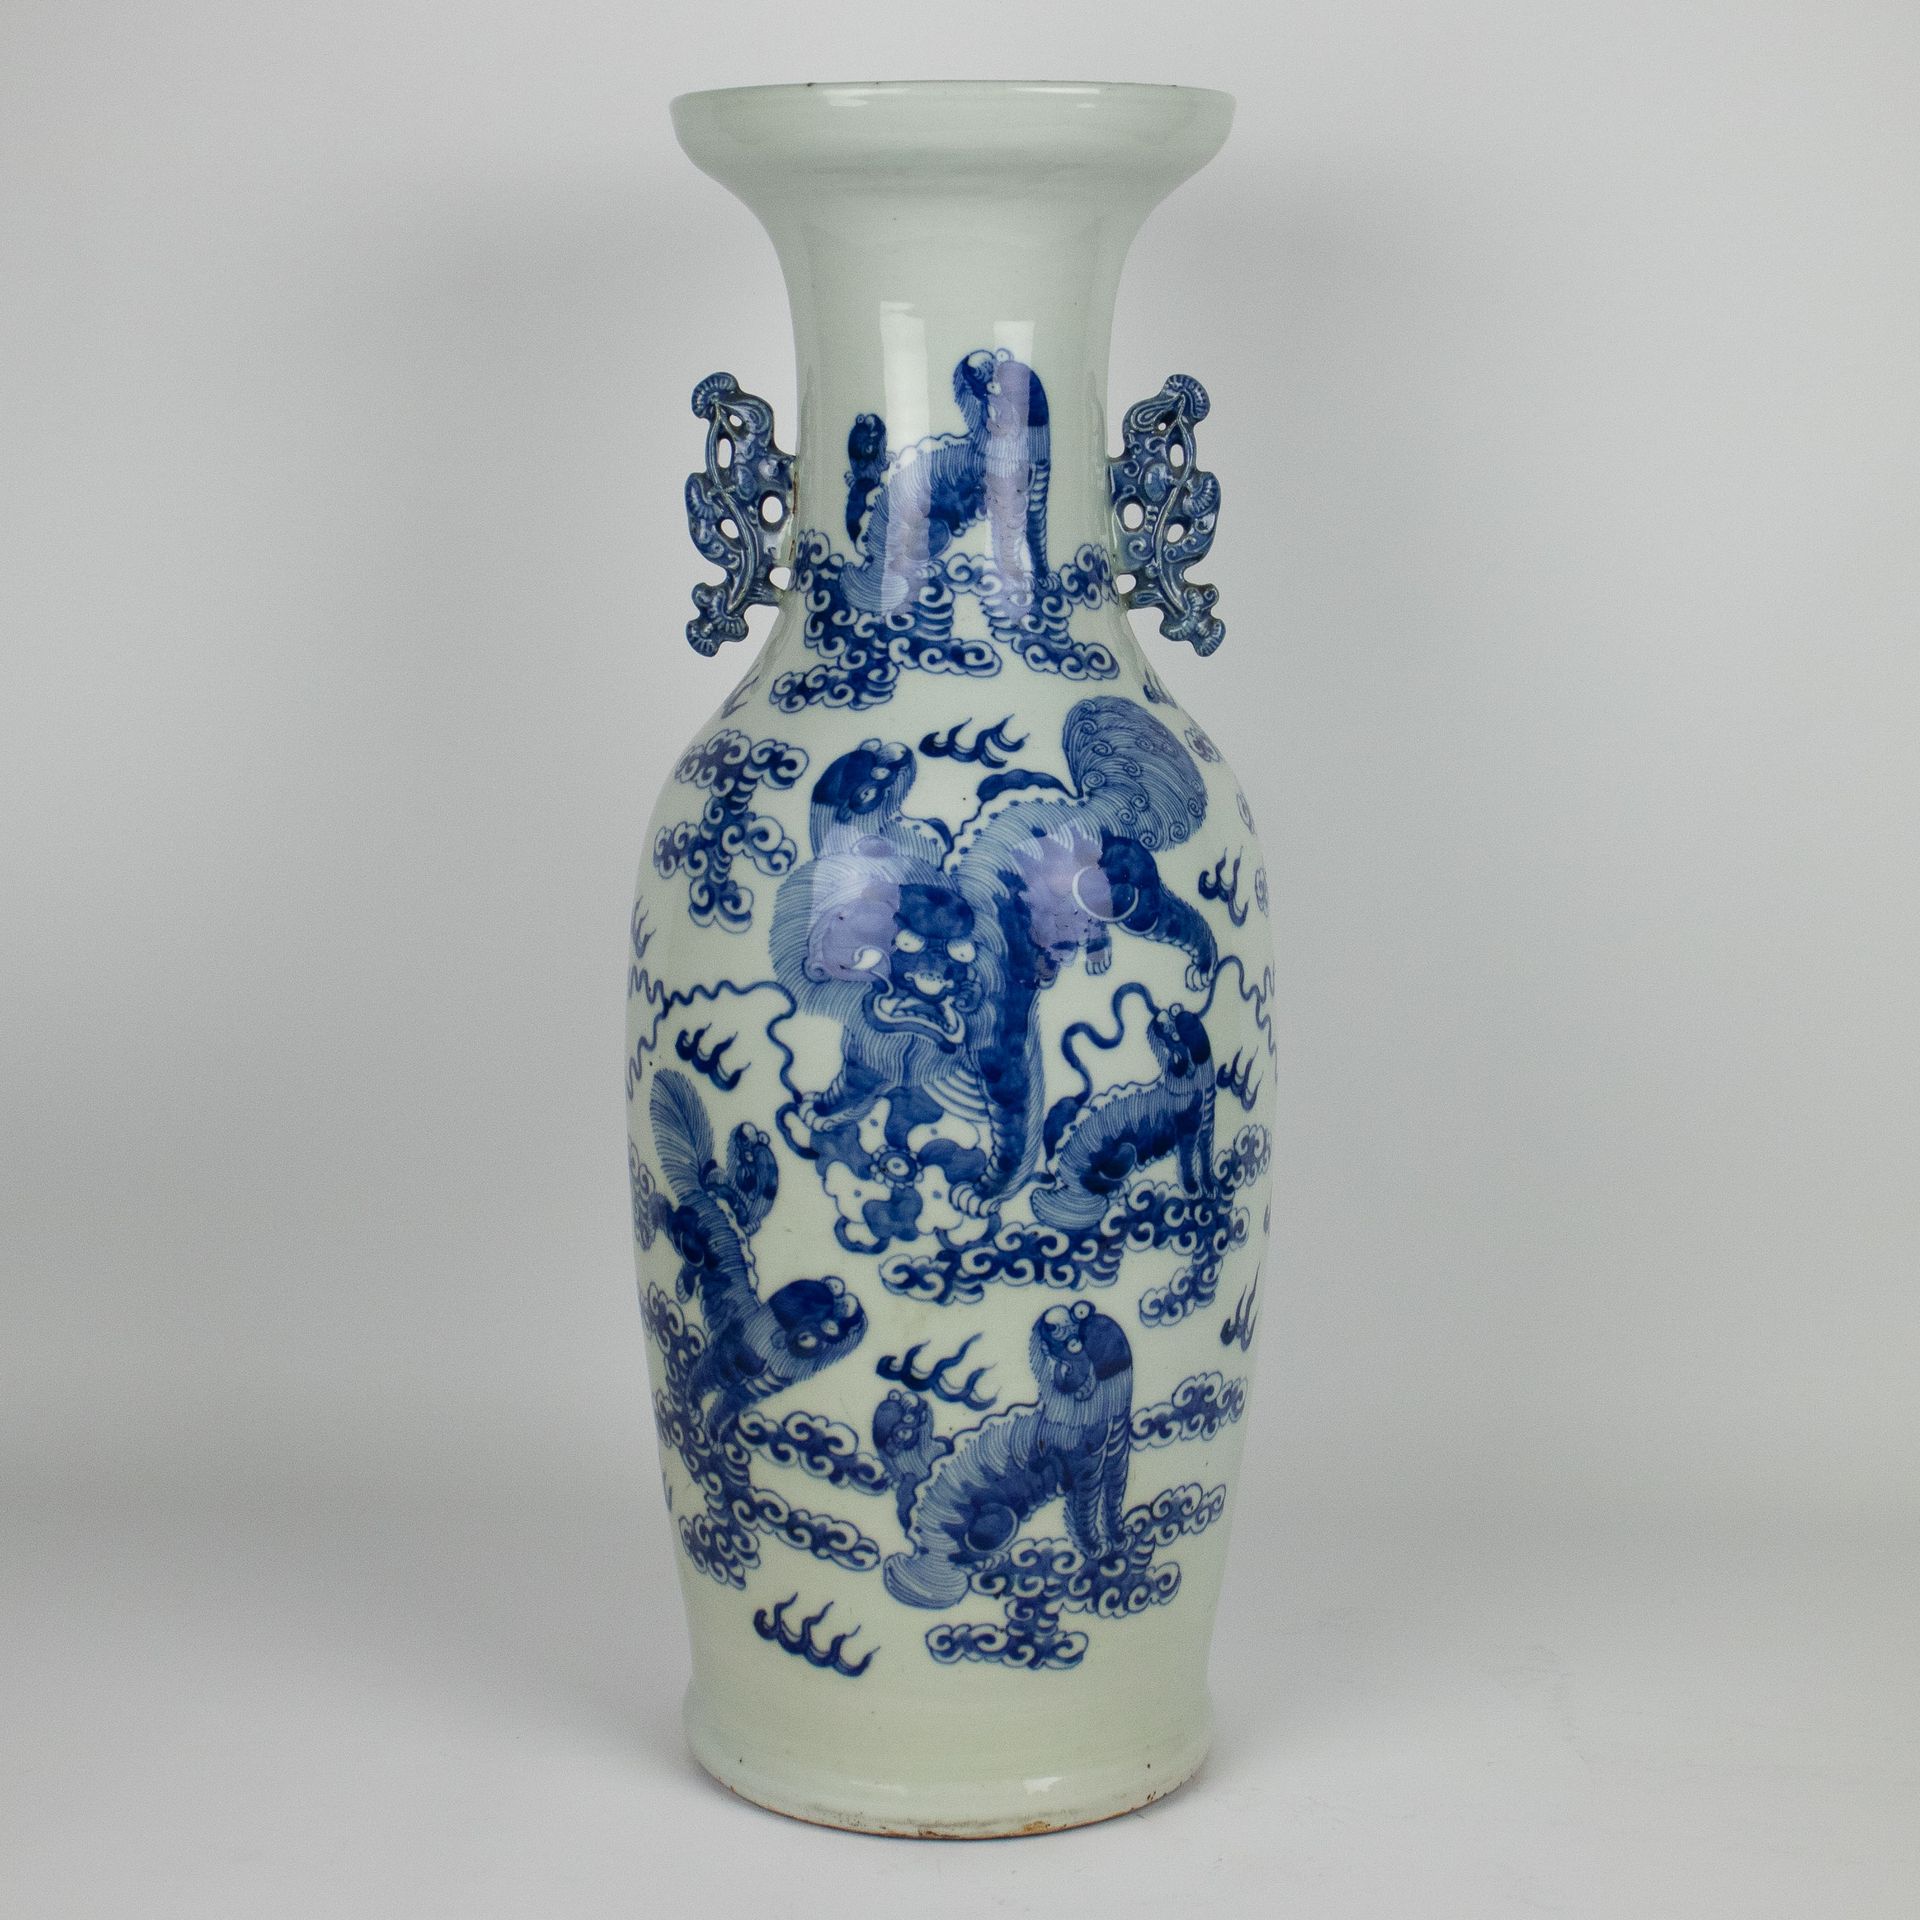 A Chinese celadon vase end 19th century 饰有狗和幼崽。
，高60厘米，是19世纪初的中国青花瓷瓶。